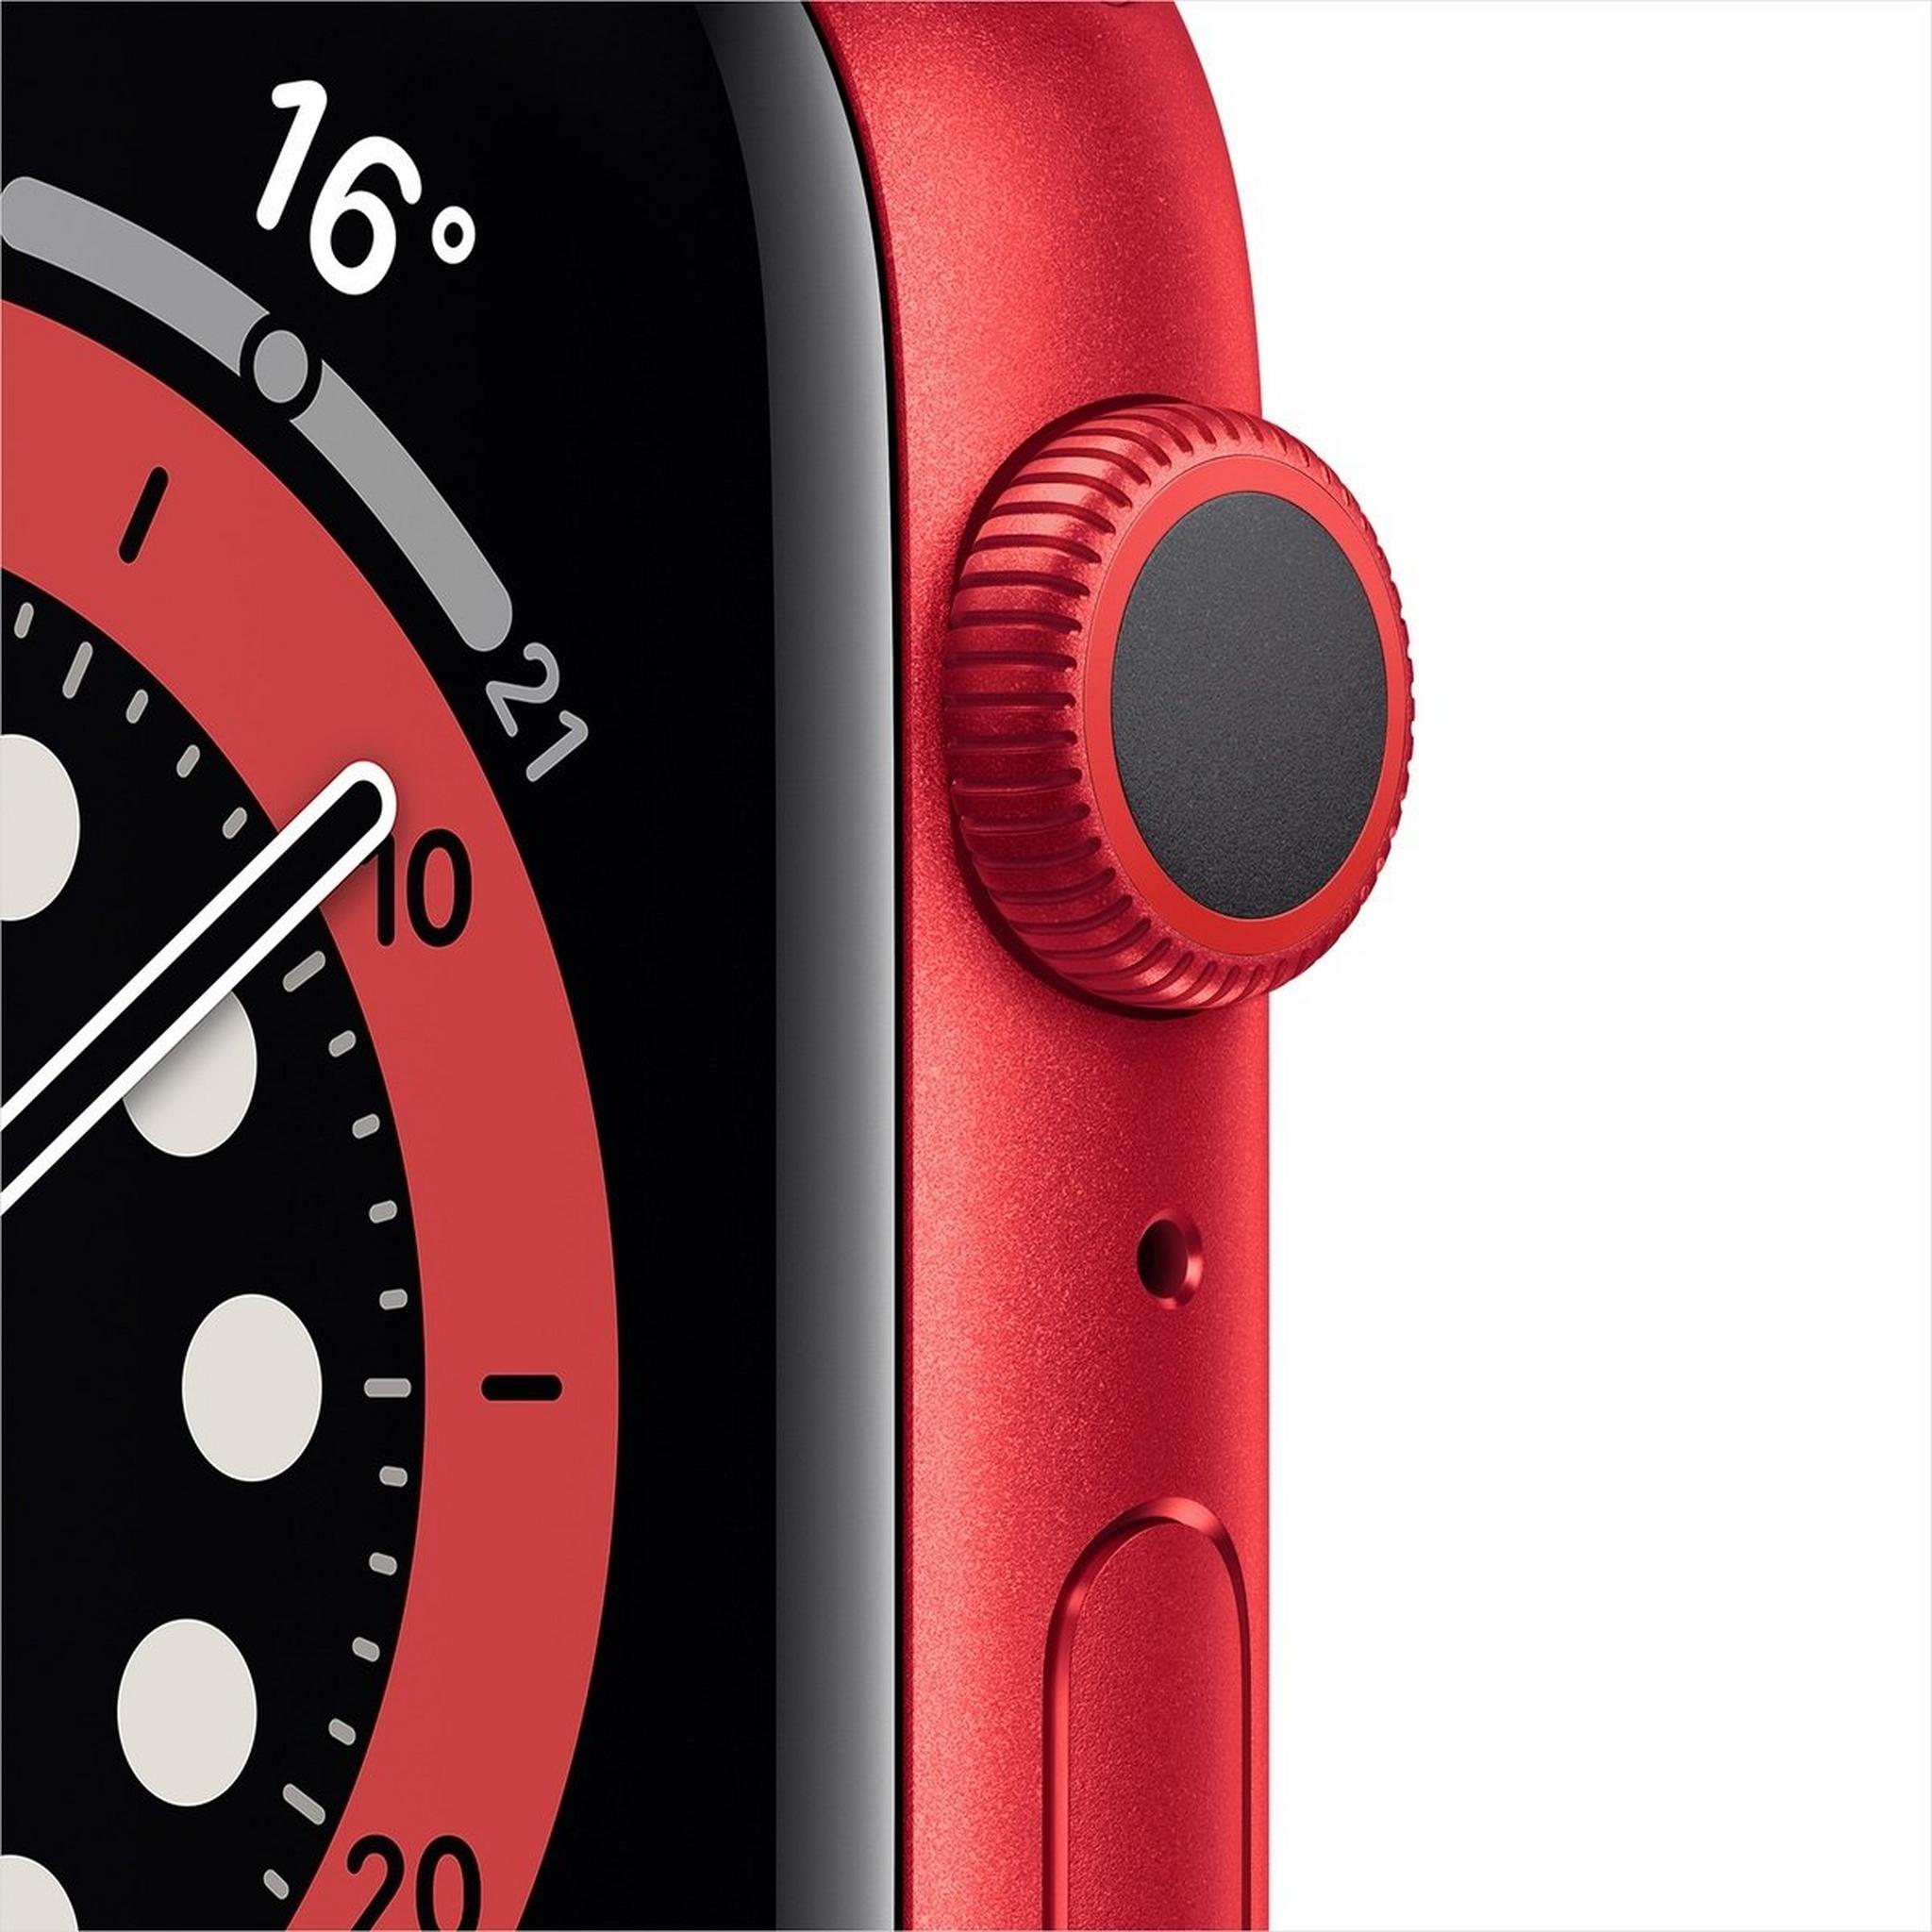 Apple Watch Series 6 GPS 44mm Aluminum Case Smart Watch - Red